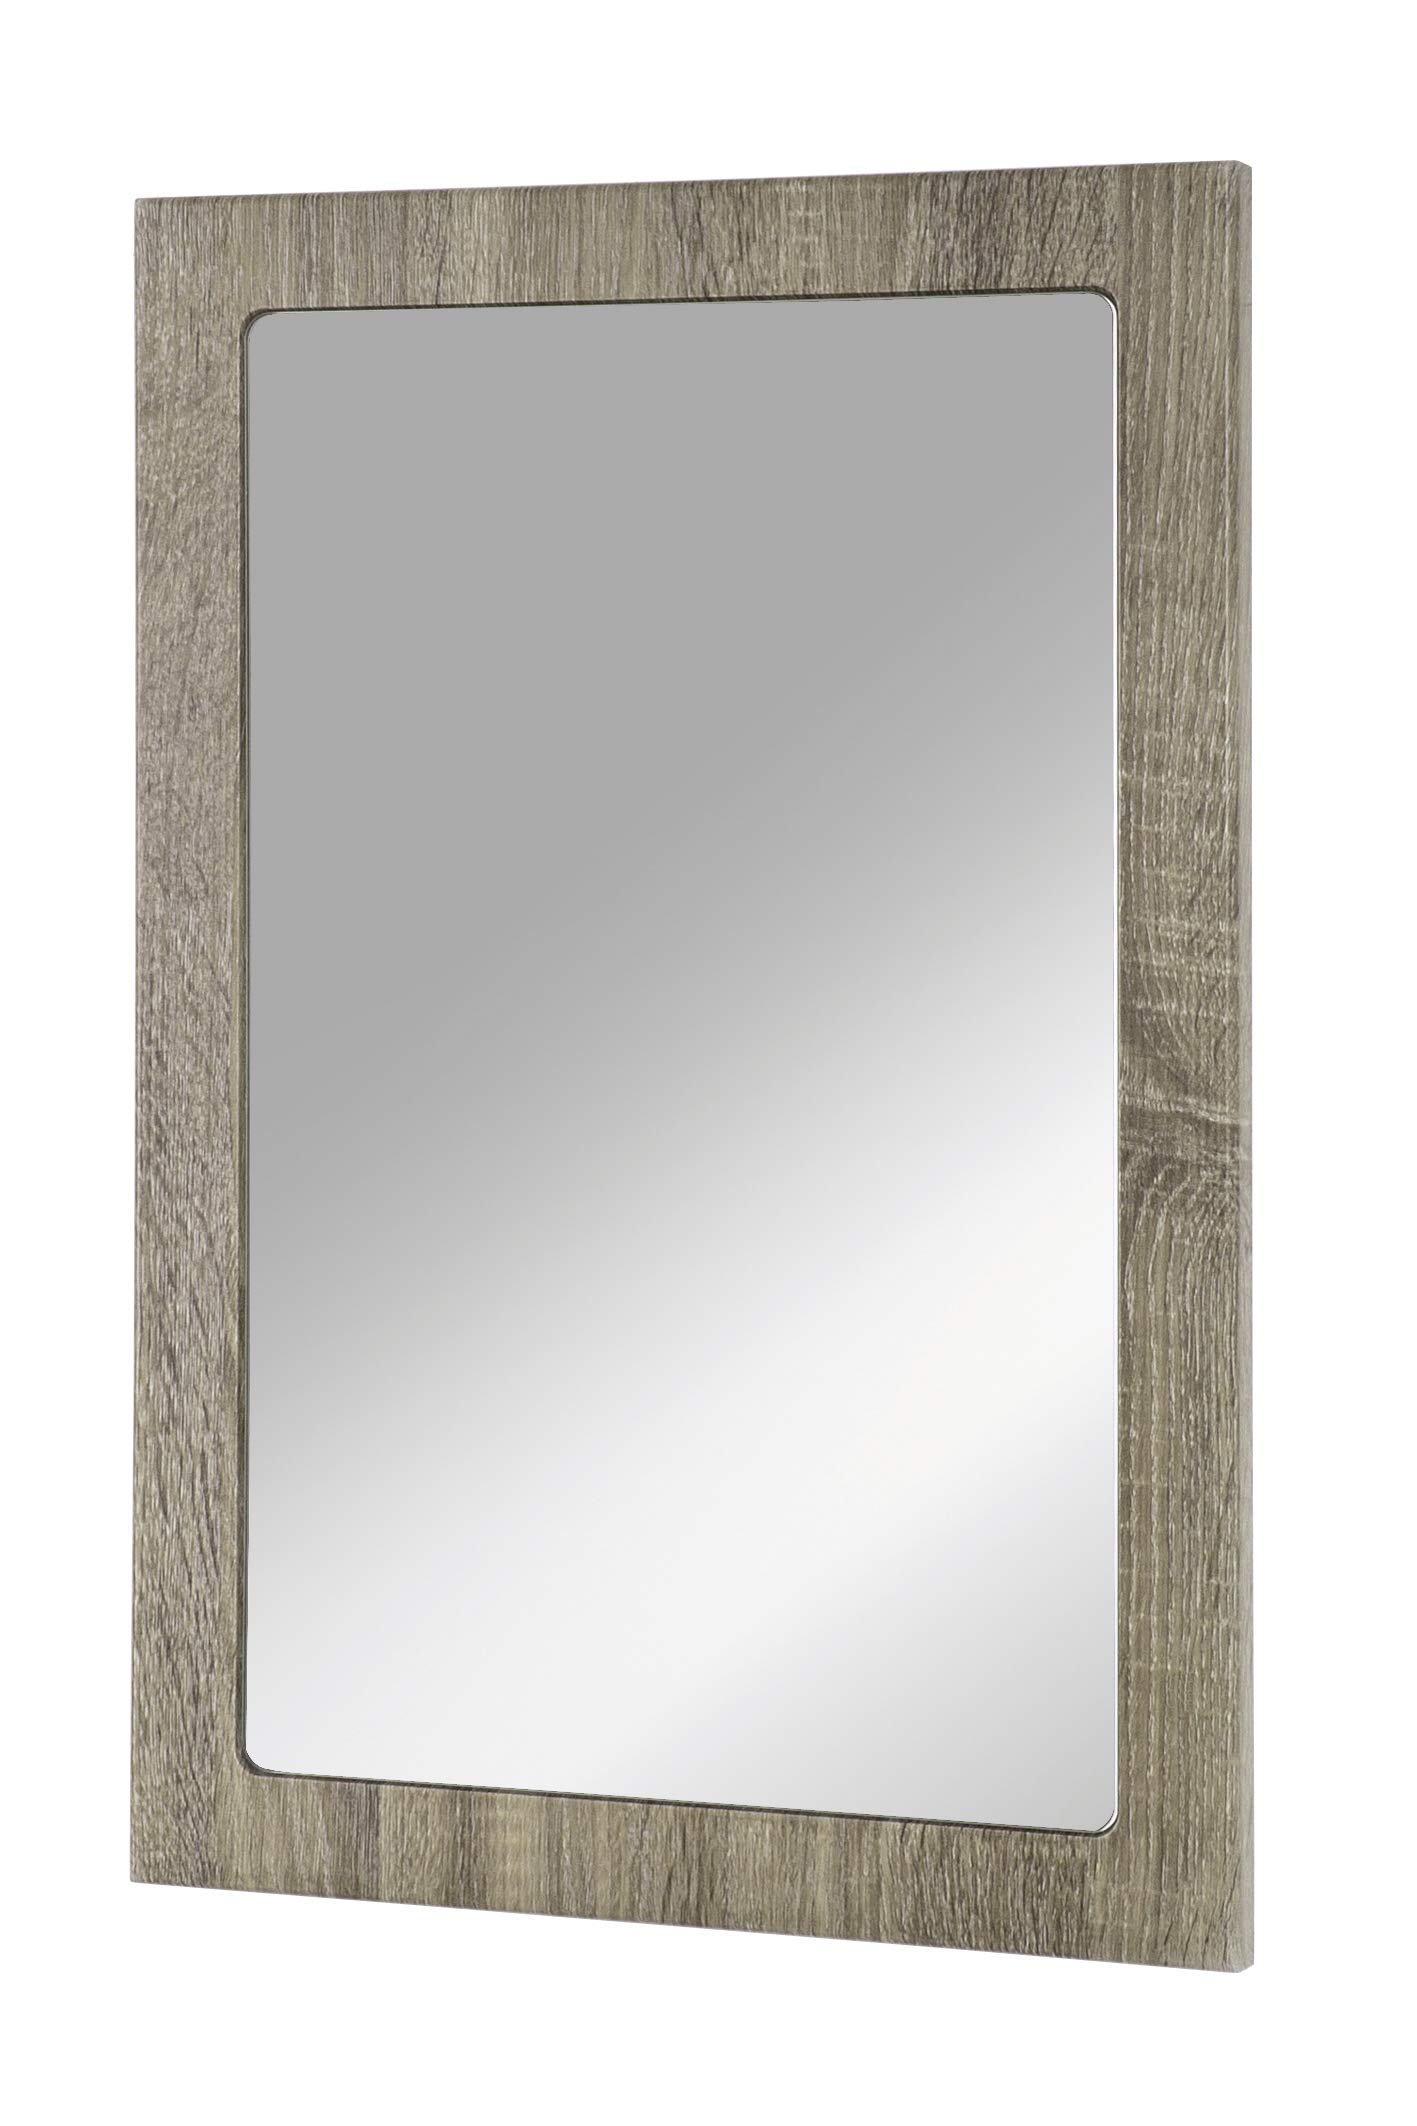 HAKU Möbel Spiegel, MDF, eiche trüffel, B 40 x T 2 x H 60 cm